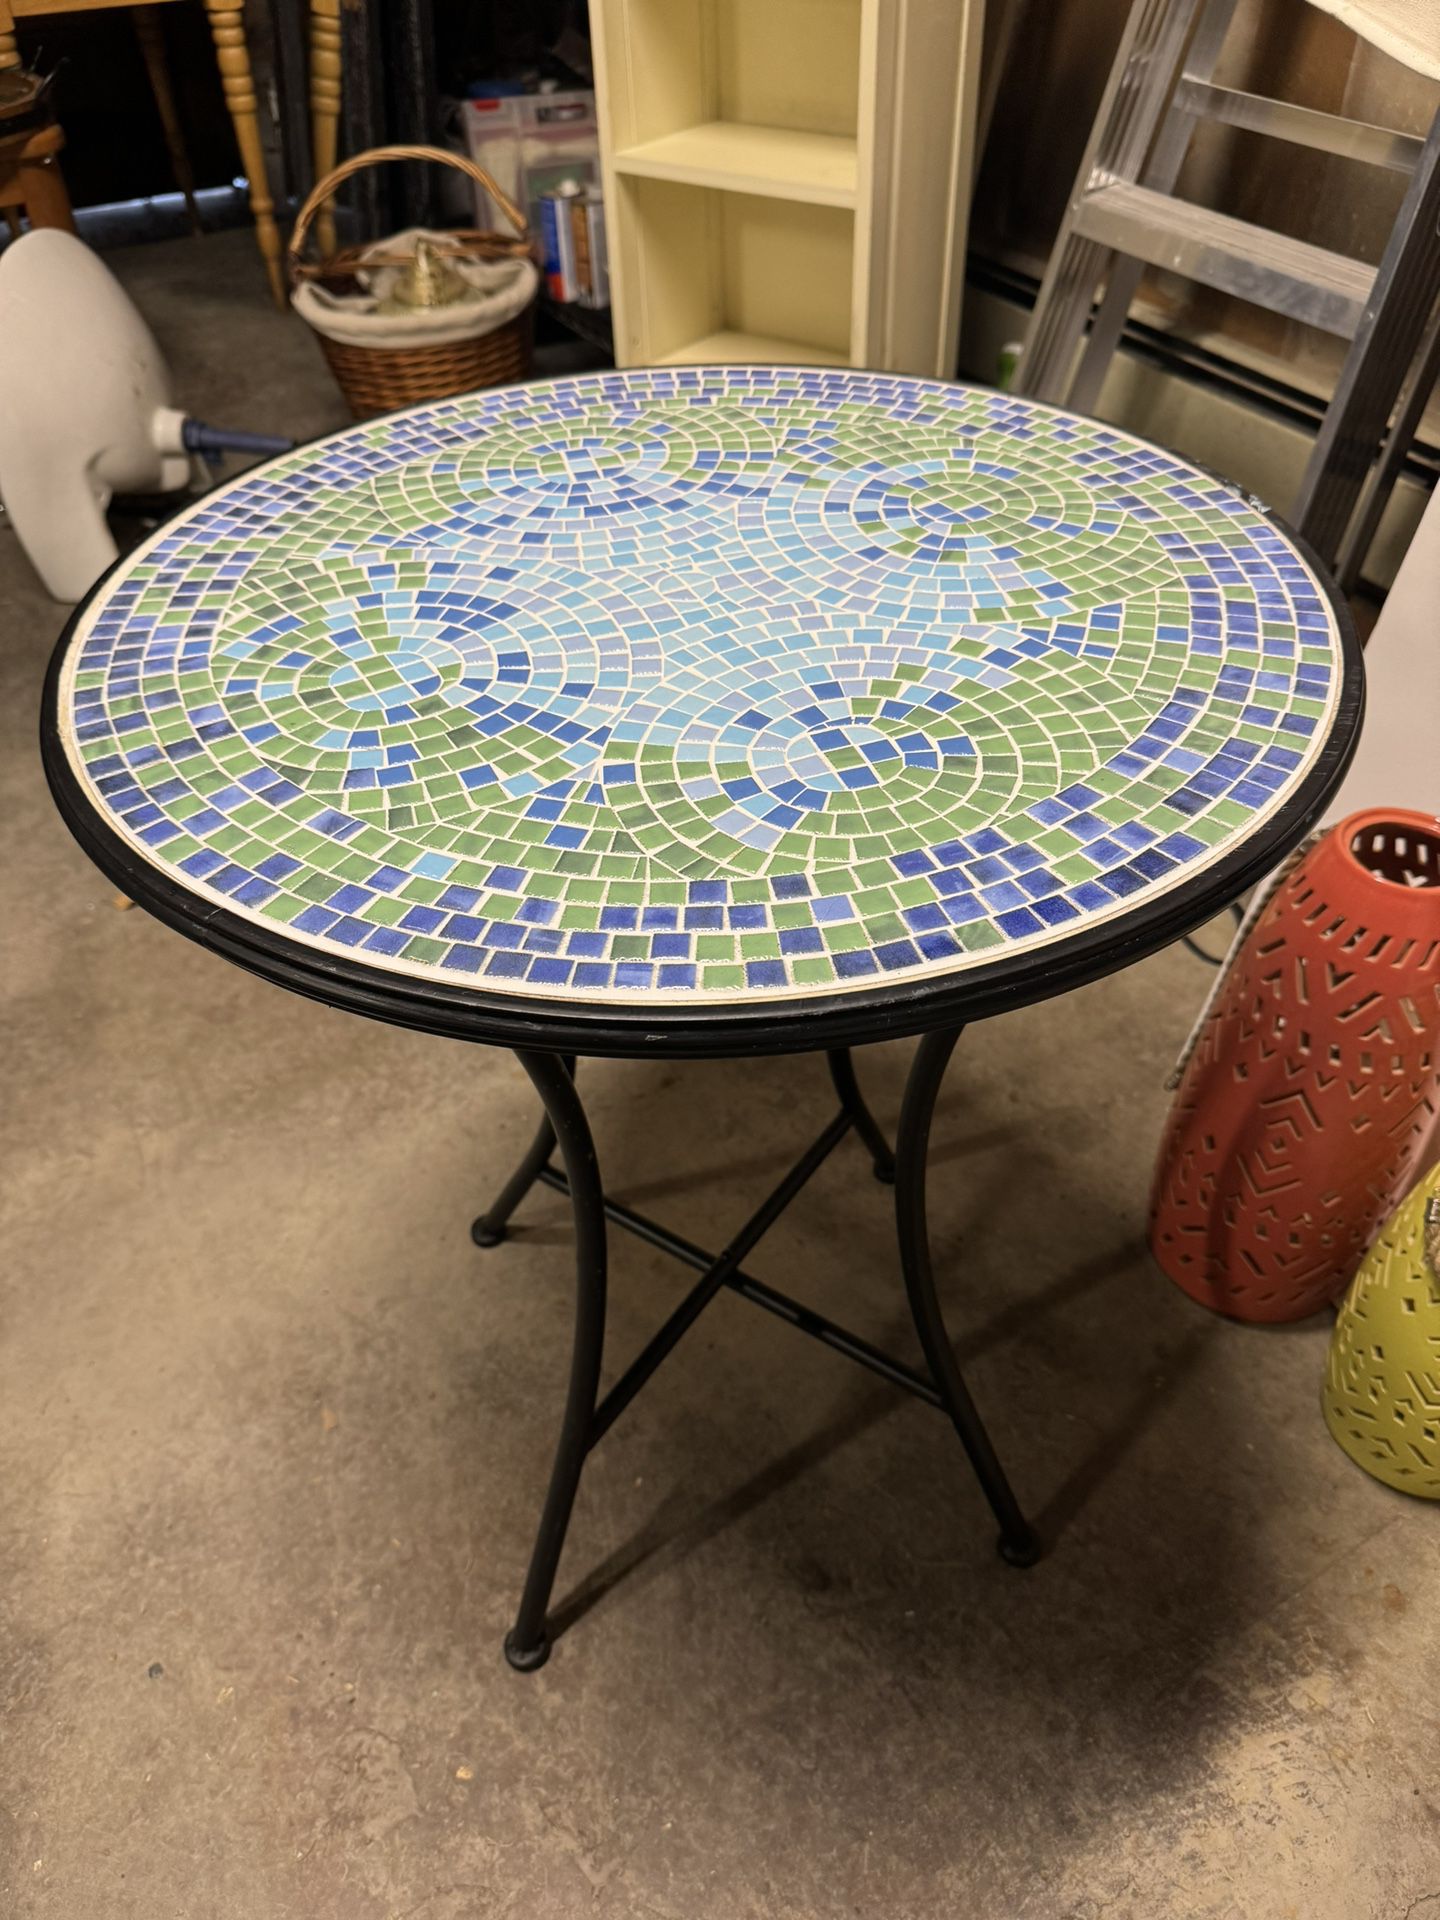 Tile & Wrought Iron Table